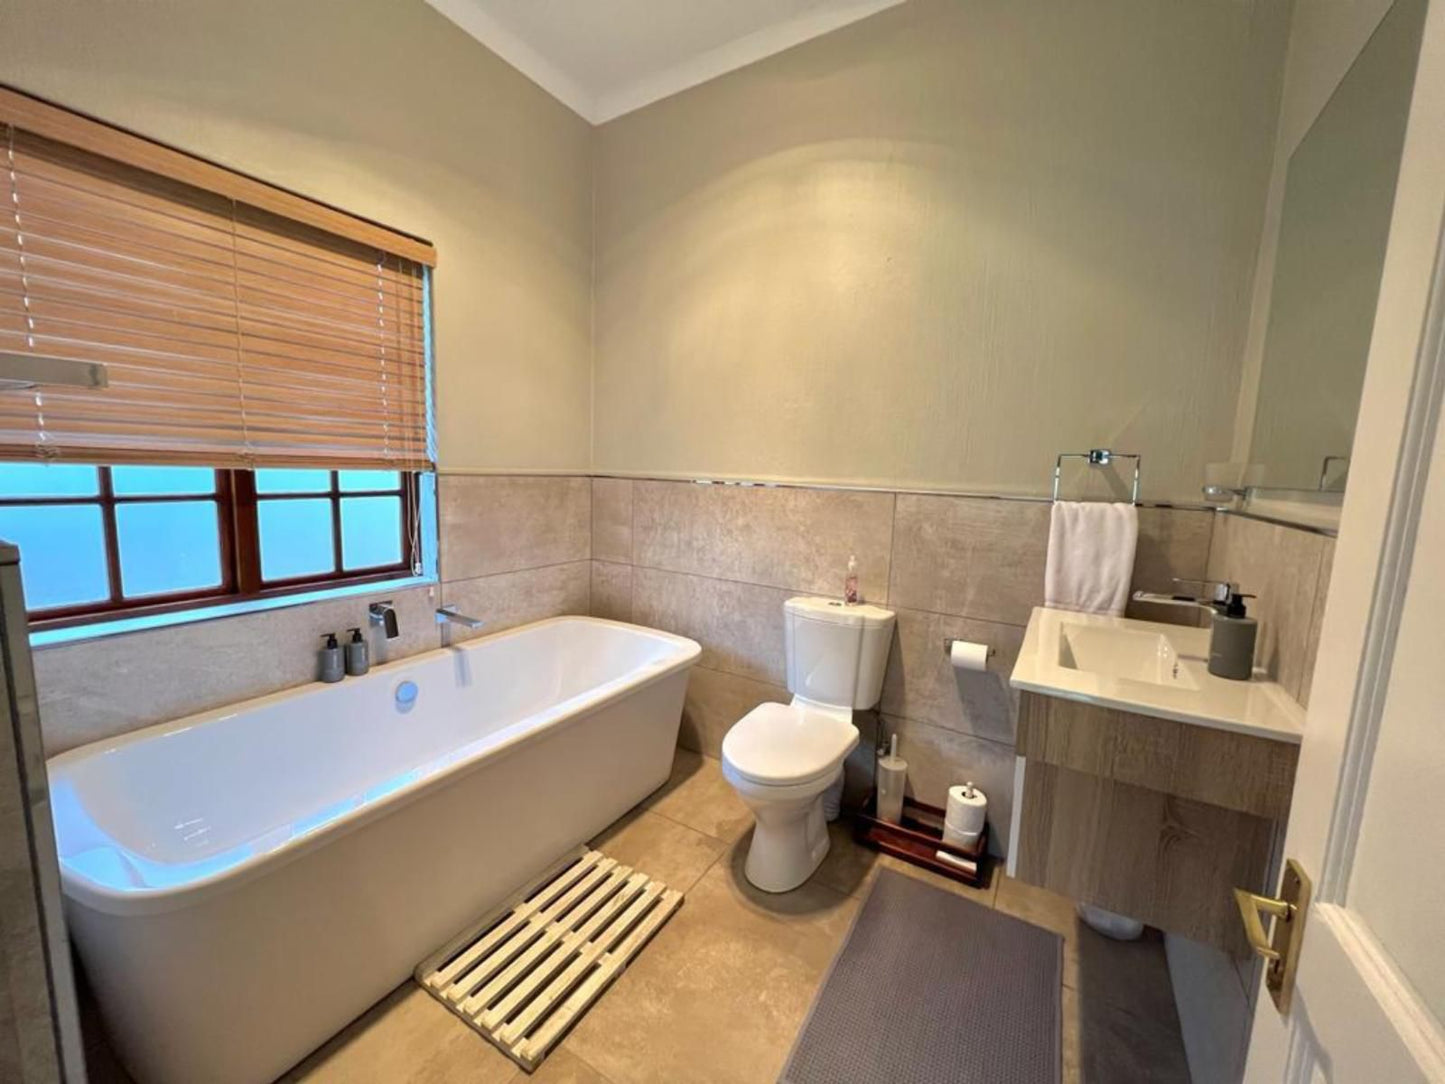 Oaklane Estate Le Rendezvous Dullstroom Mpumalanga South Africa Bathroom